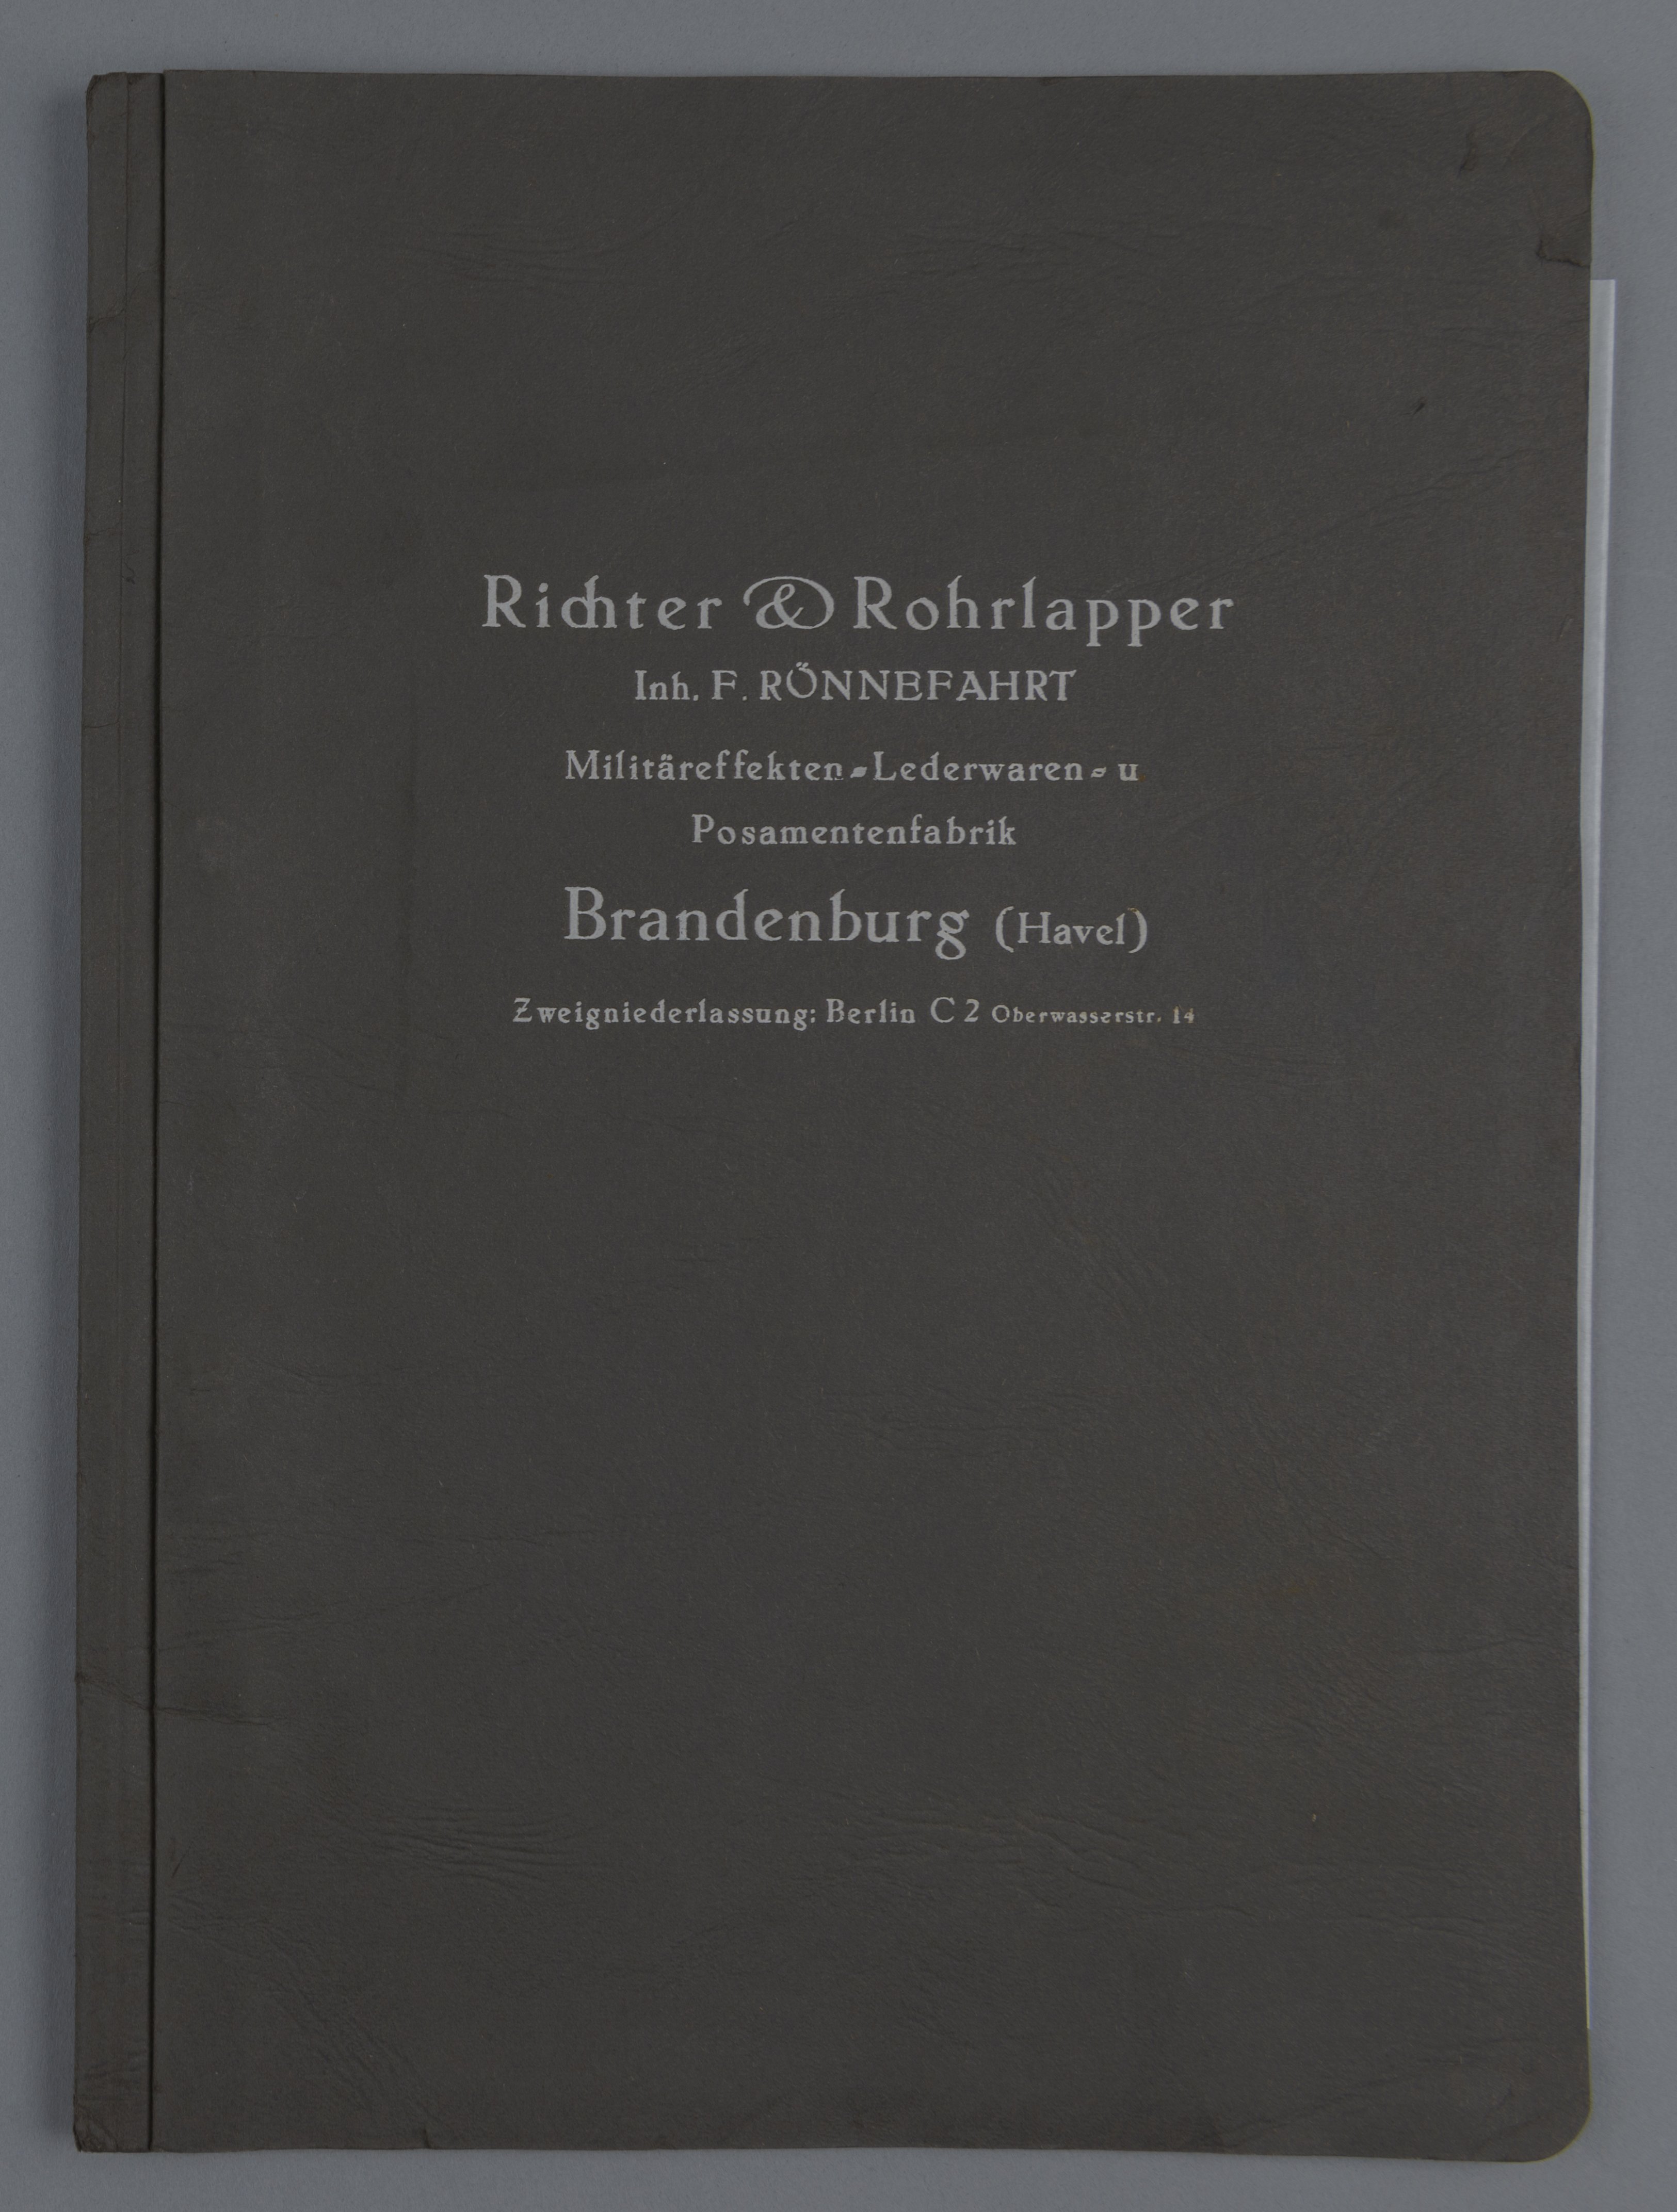 Mustermappe Richter & Rohrlapper (Stadtmuseum Brandenburg an der Havel CC BY-NC-SA)